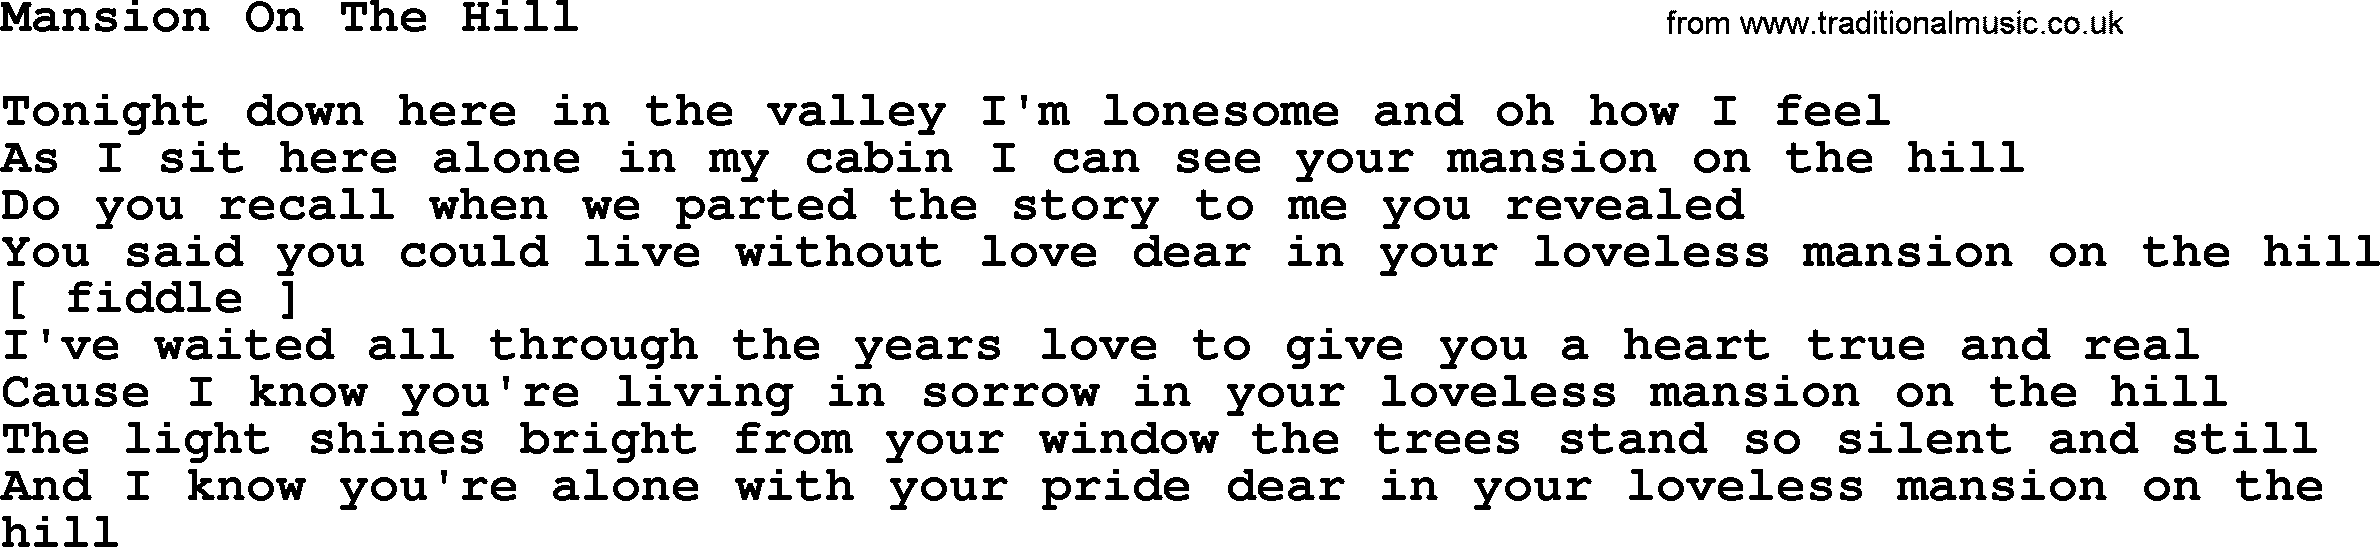 George Jones song: Mansion On The Hill, lyrics